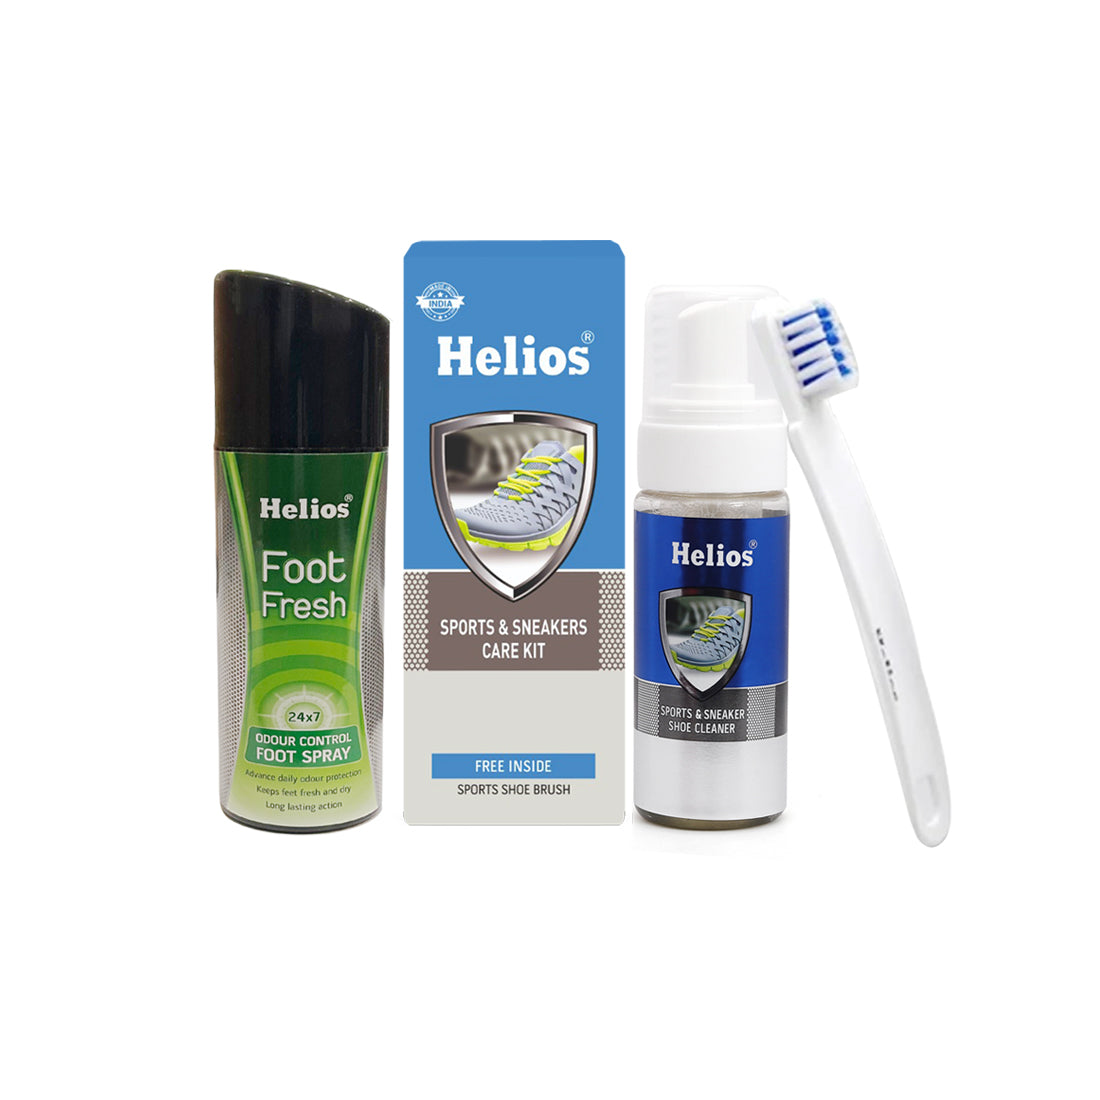 Helios Foot Fresh & Helios Sports Kit